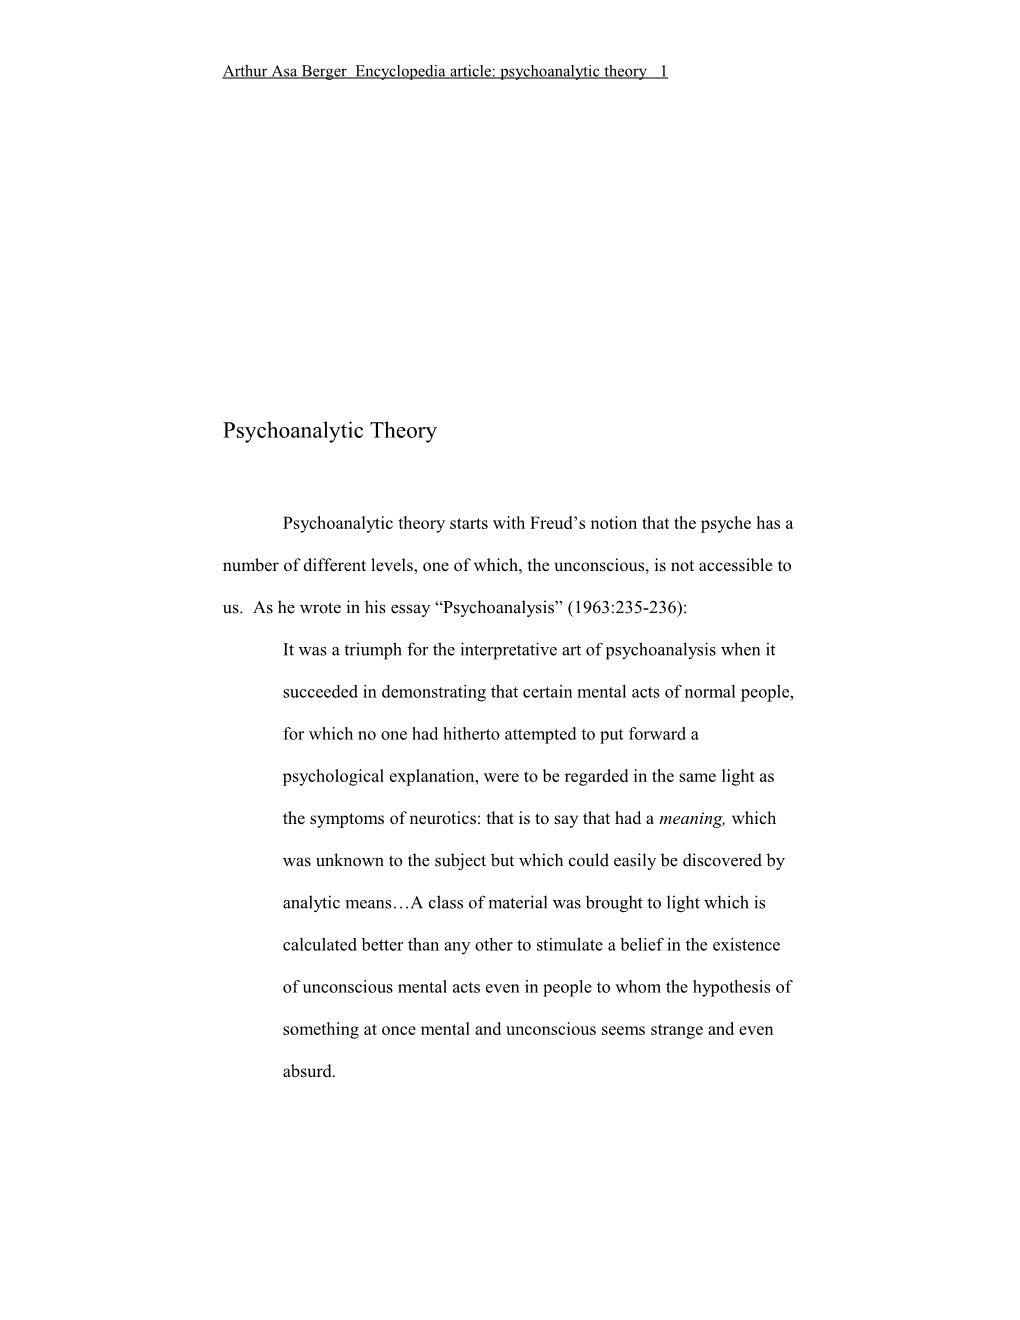 Arthur Asa Berger Encyclopedia Article: Psychoanalytic Theory 1